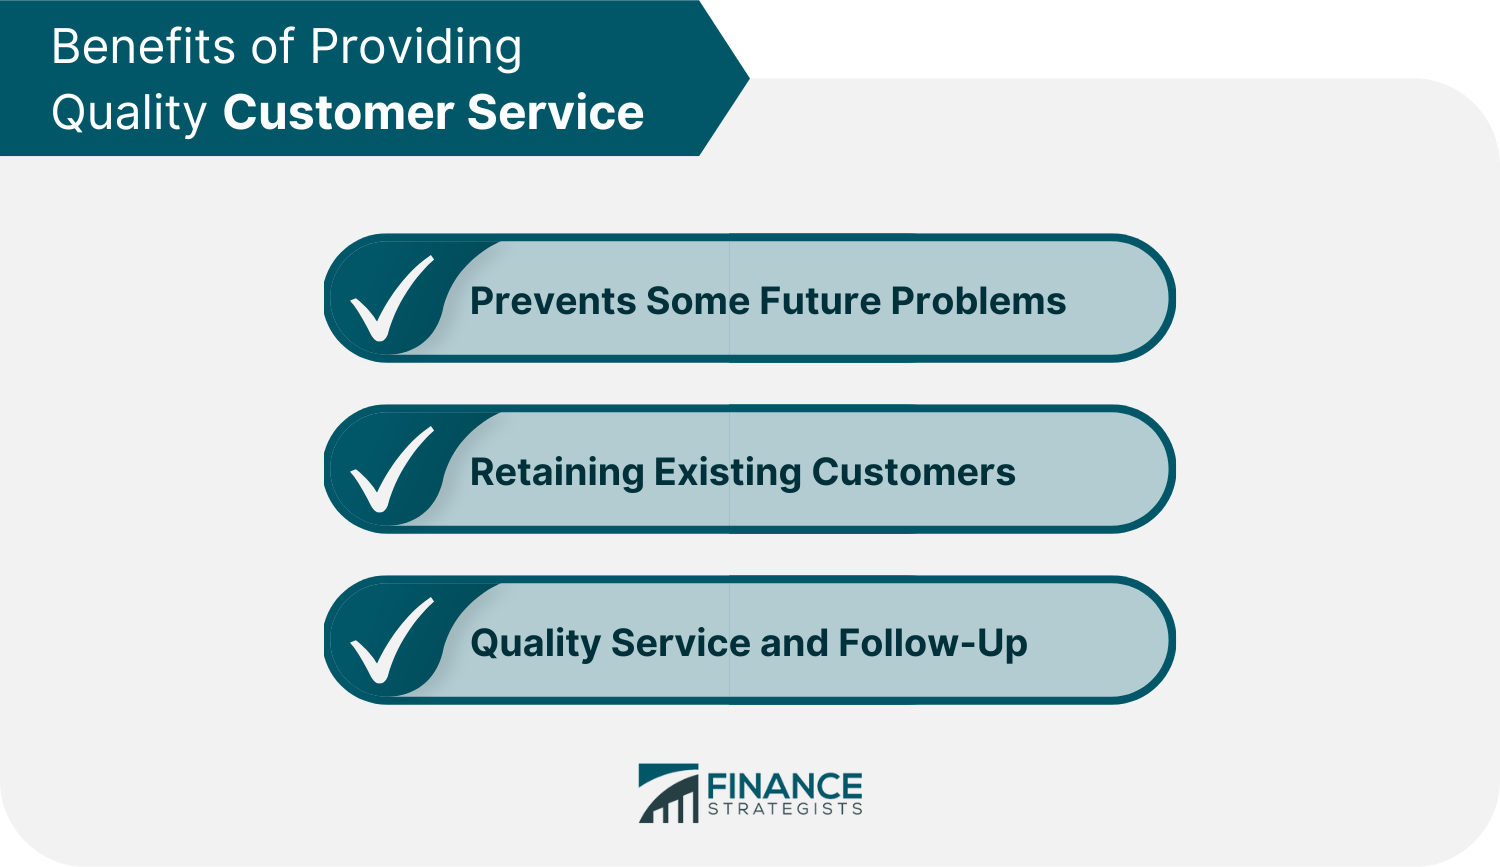 Benefits of Providing Quality Customer Service